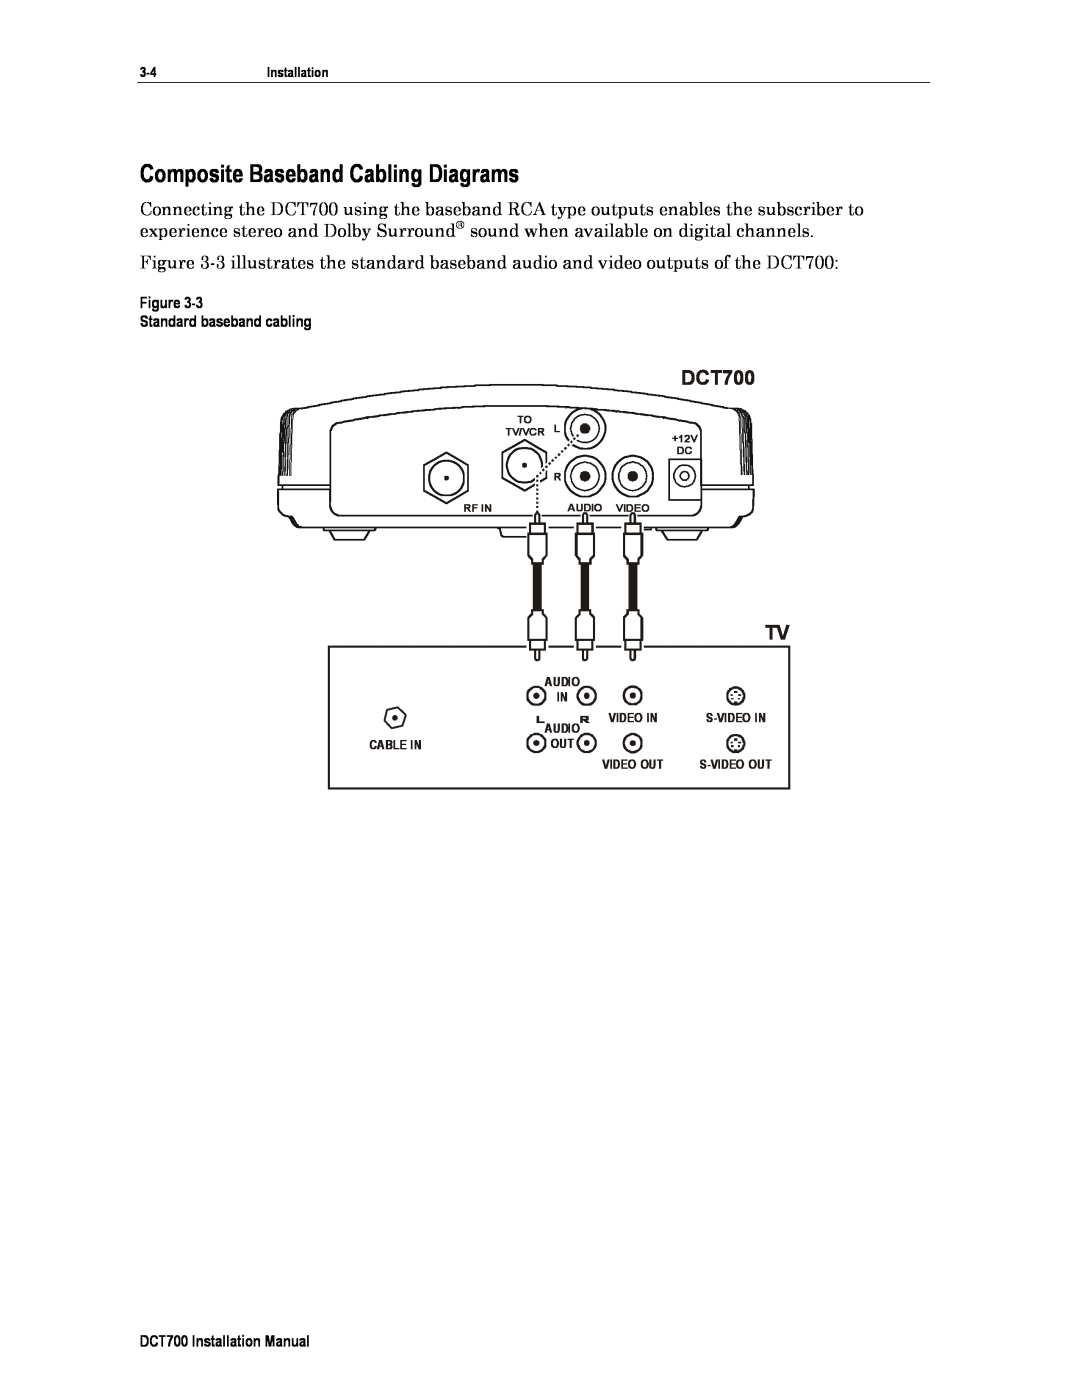 Motorola DTC700 Composite Baseband Cabling Diagrams, Figure Standard baseband cabling, DCT700 Installation Manual 